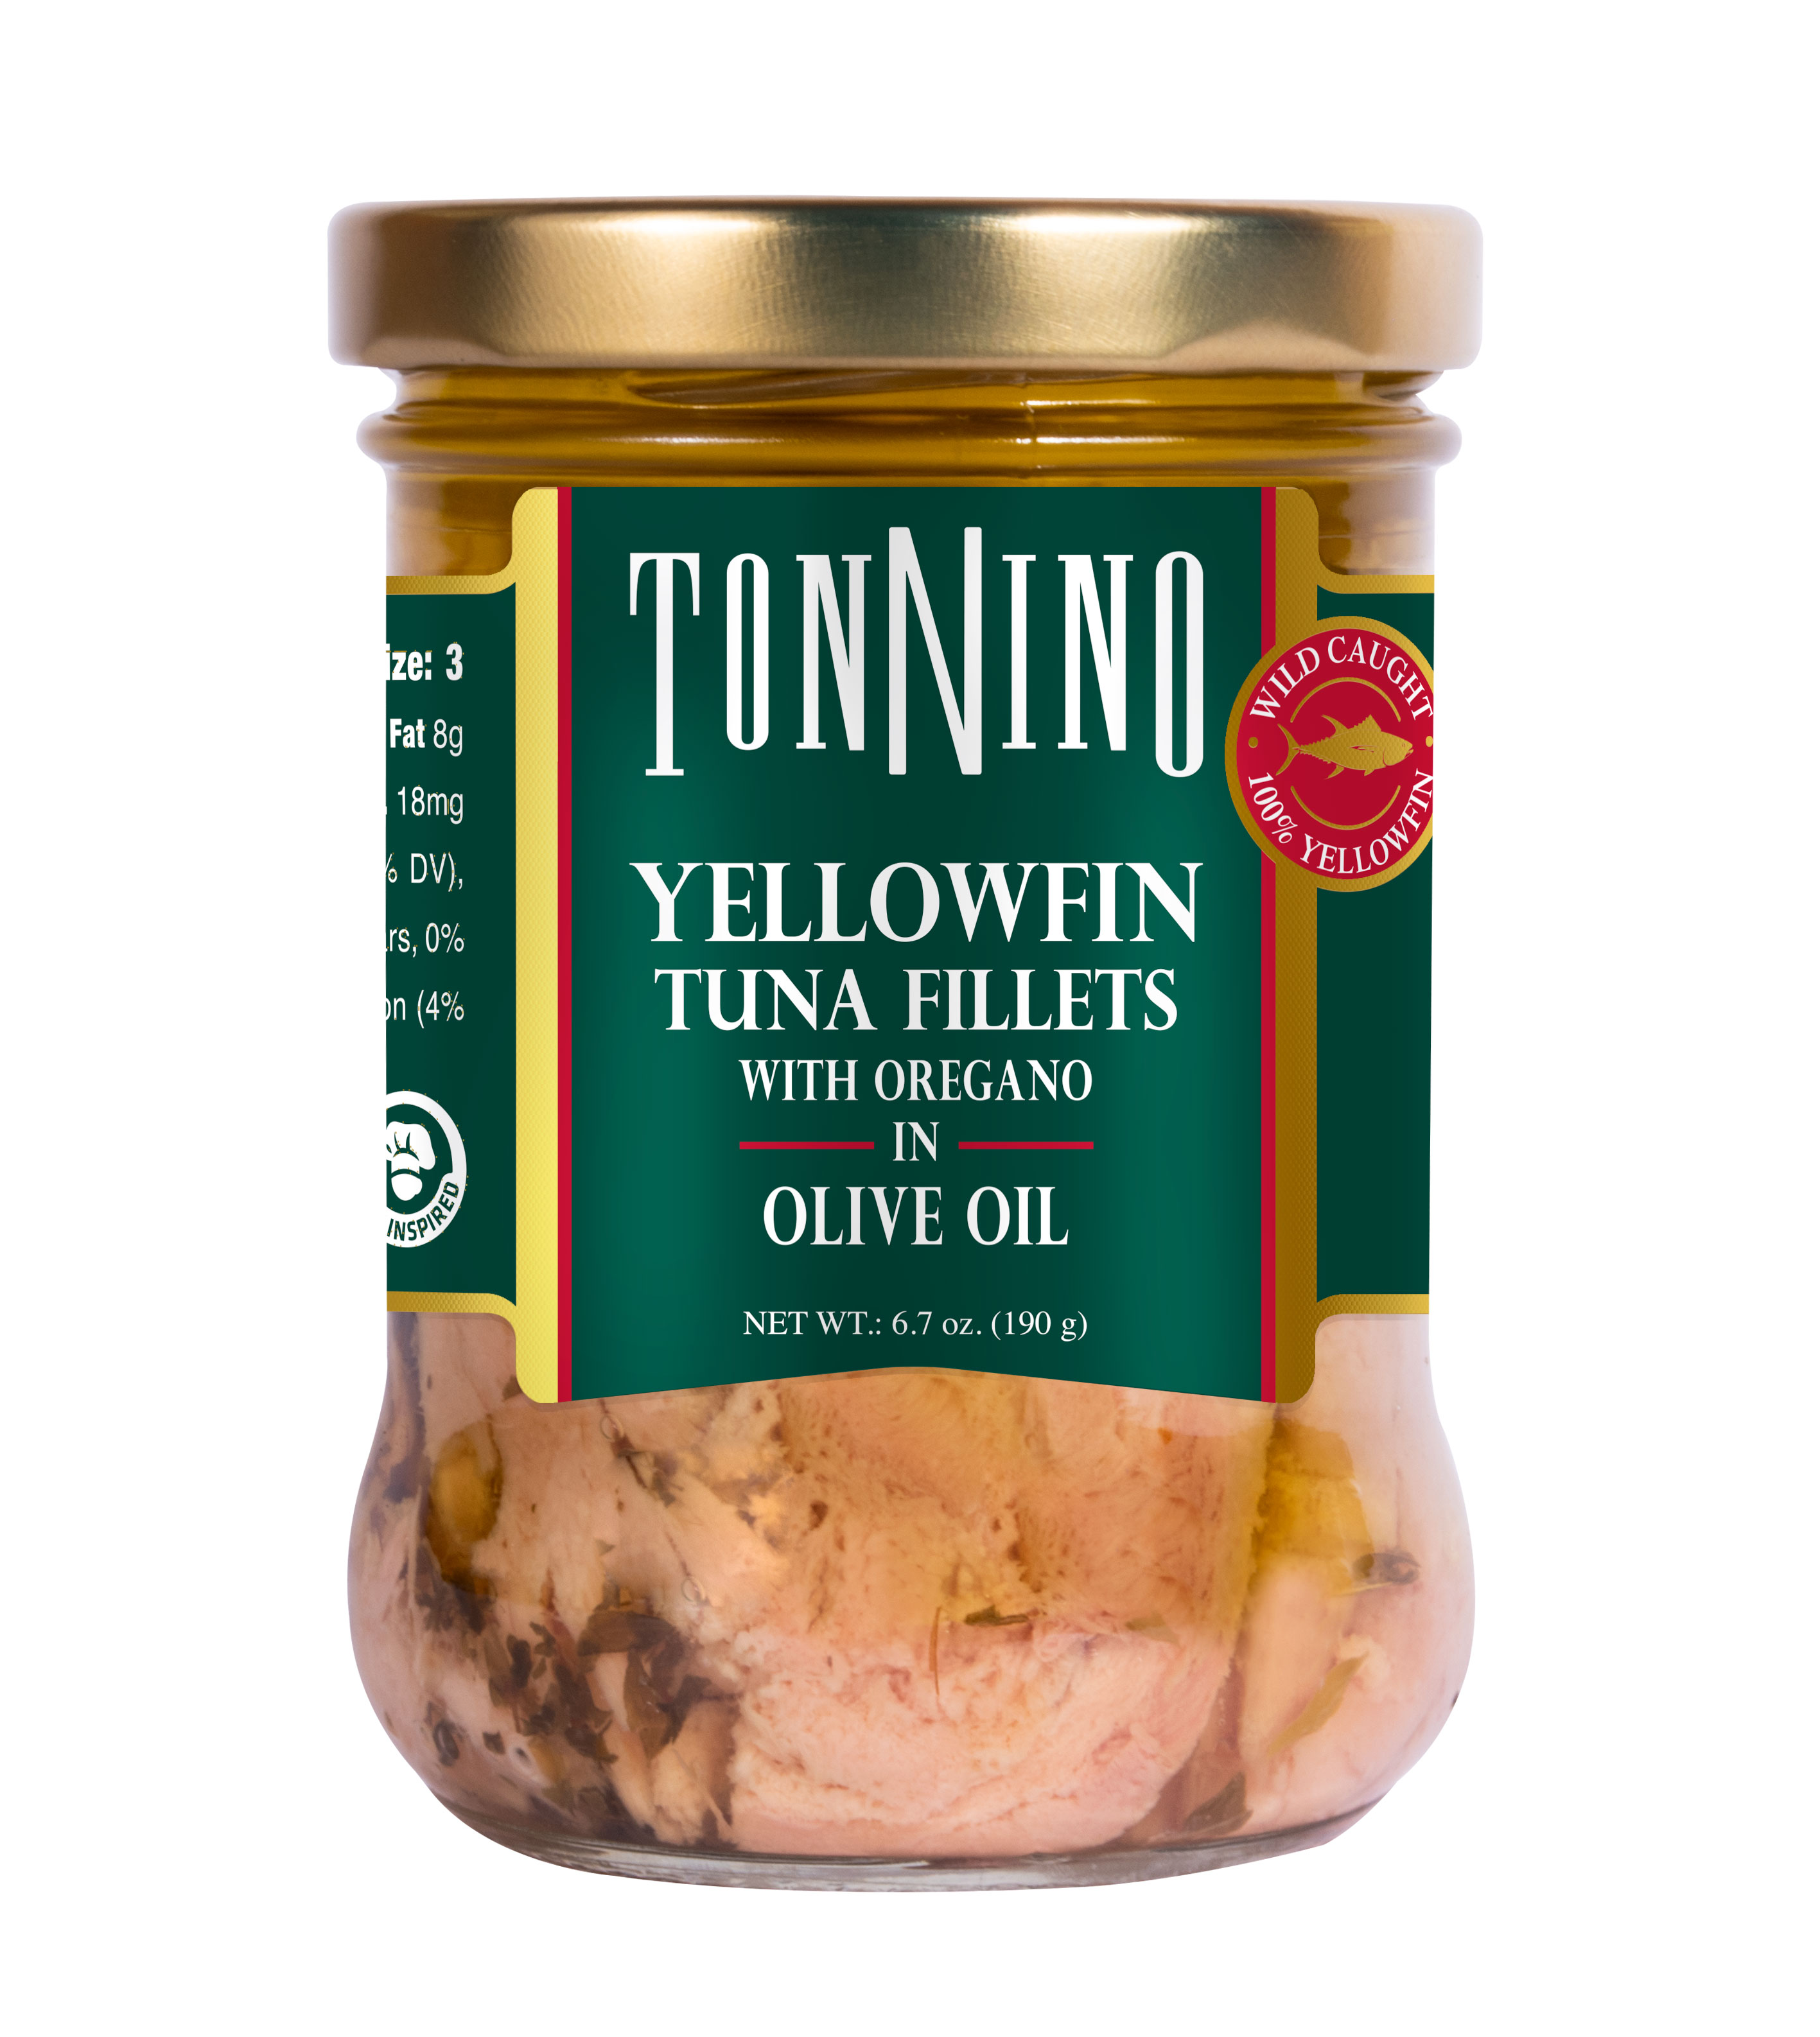 Tonnino Premium Yellowfin Tuna Fillet with Oregano in Olive Oil, Wild Caught, 6.7 oz, Jar - image 1 of 8